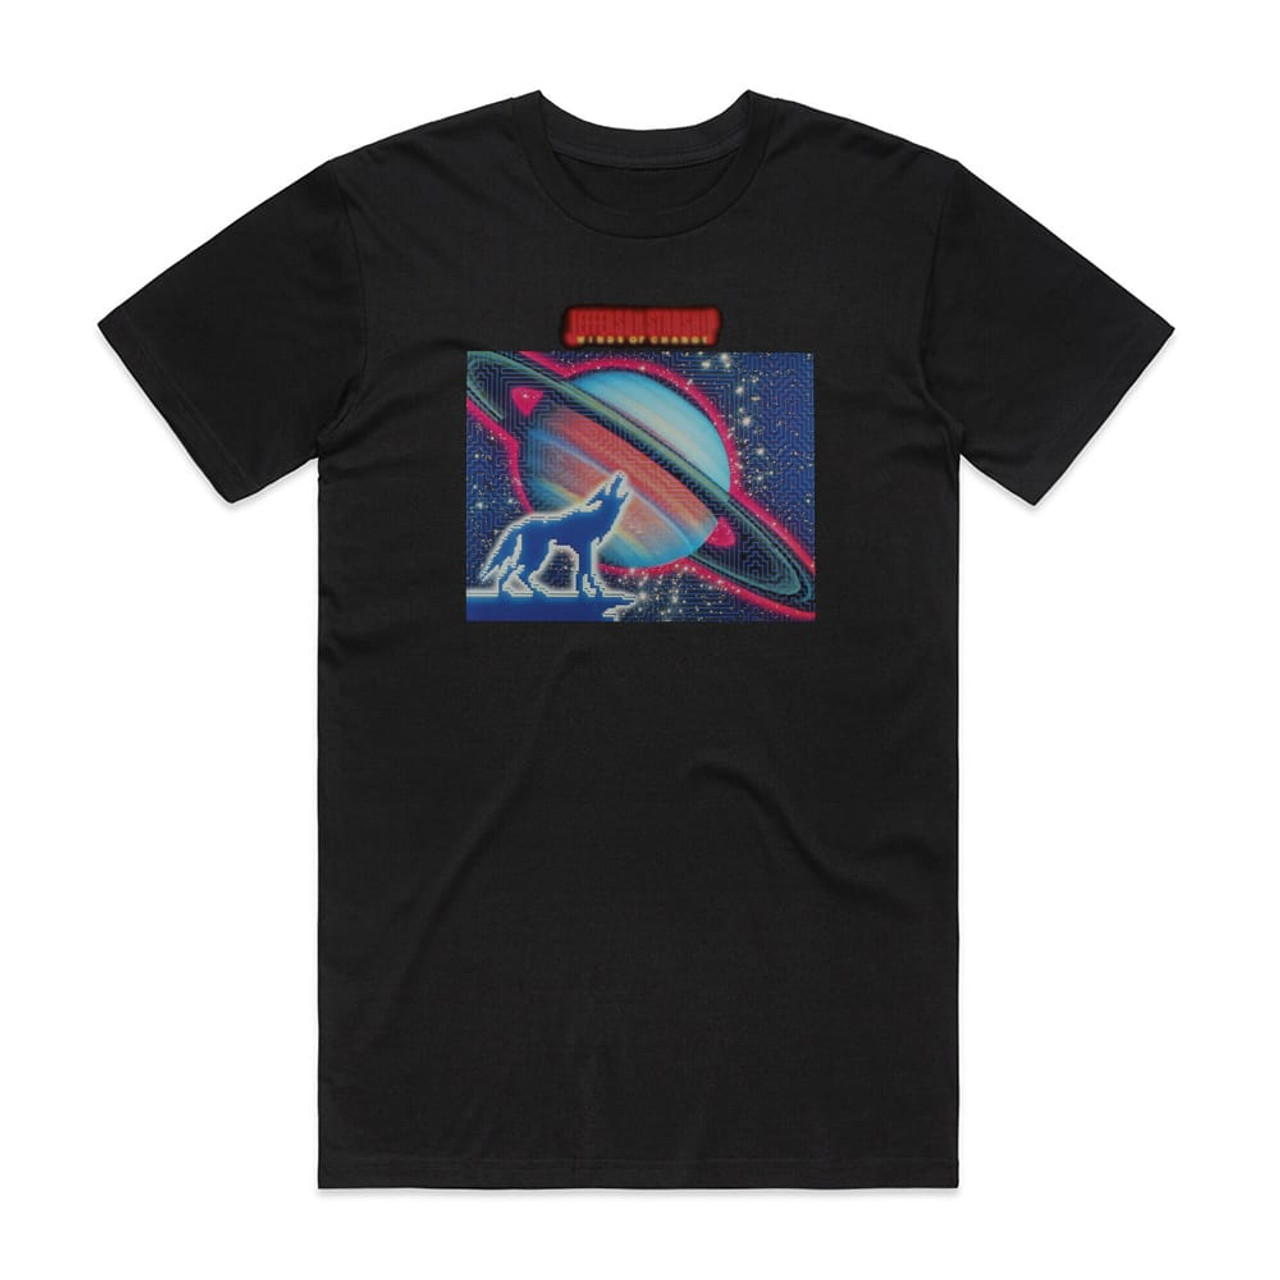 Jefferson Starship Winds Of Change Album Cover T-Shirt Black